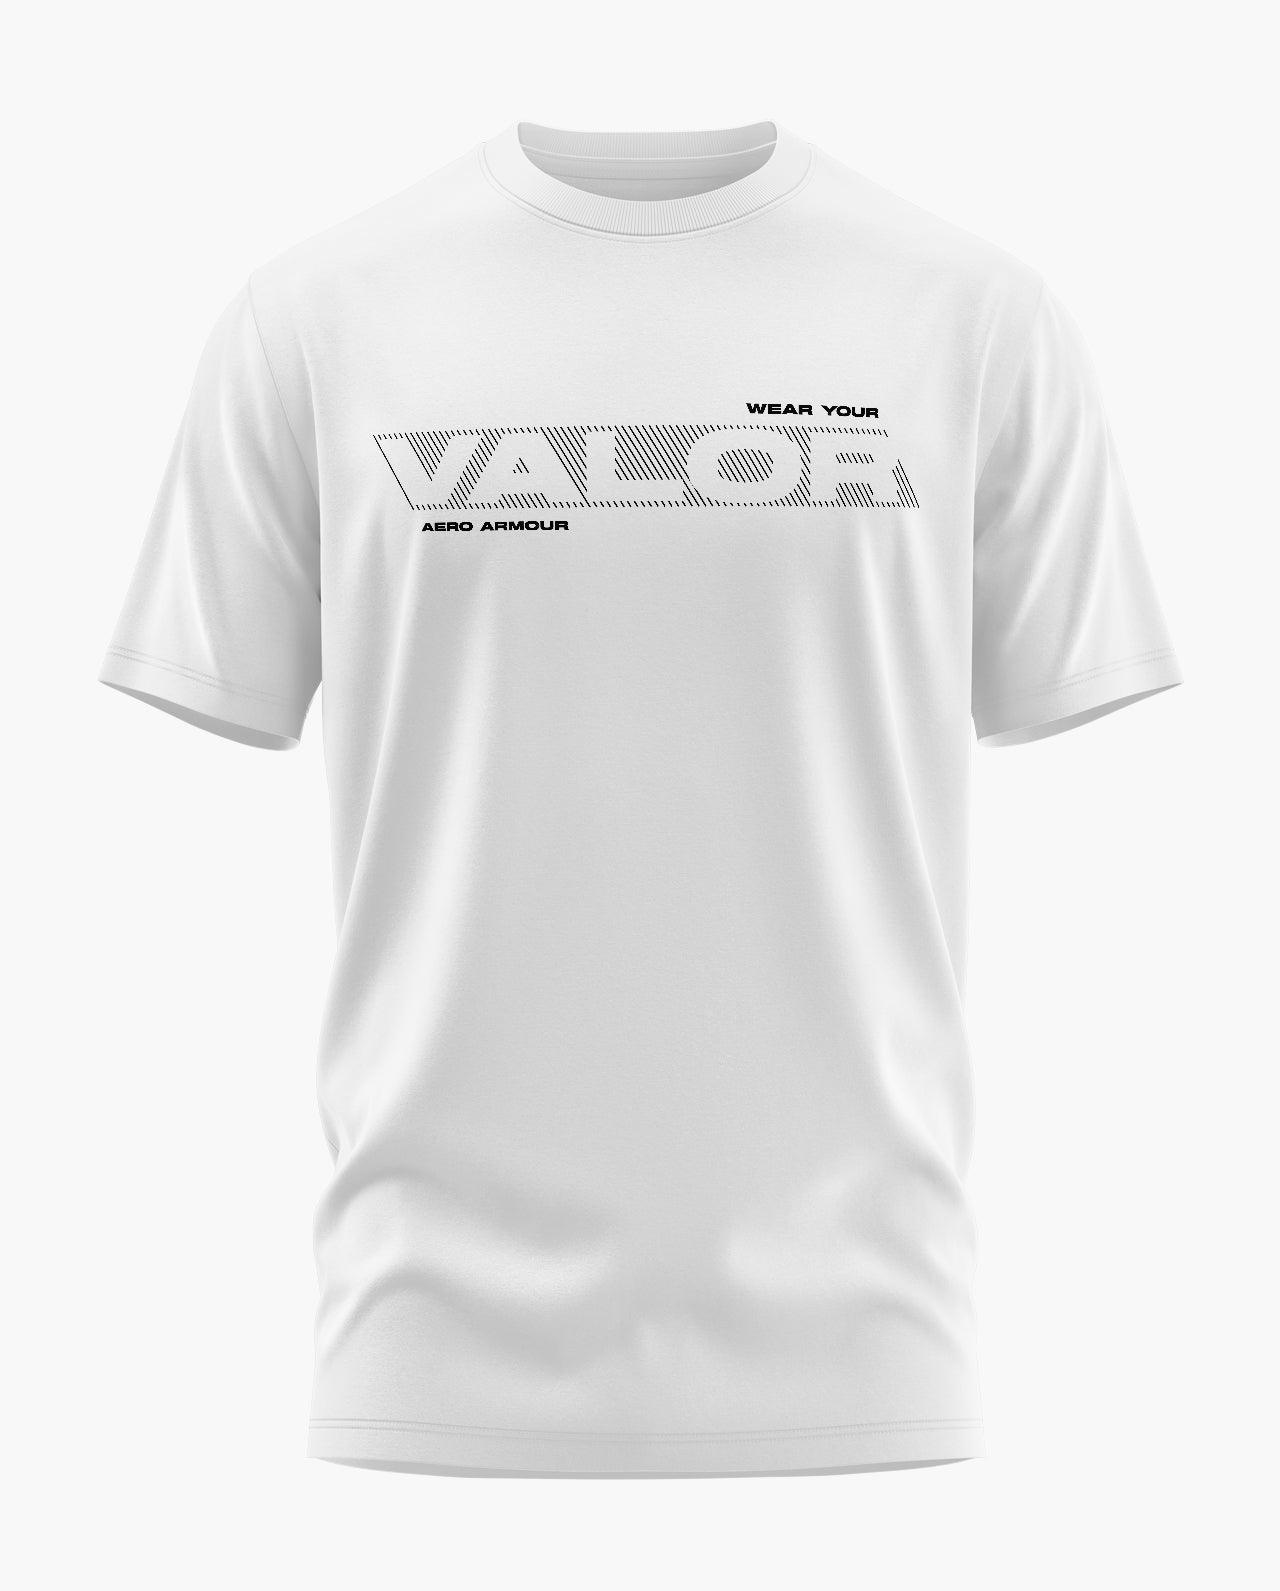 Wear Your Valor T-Shirt - Aero Armour